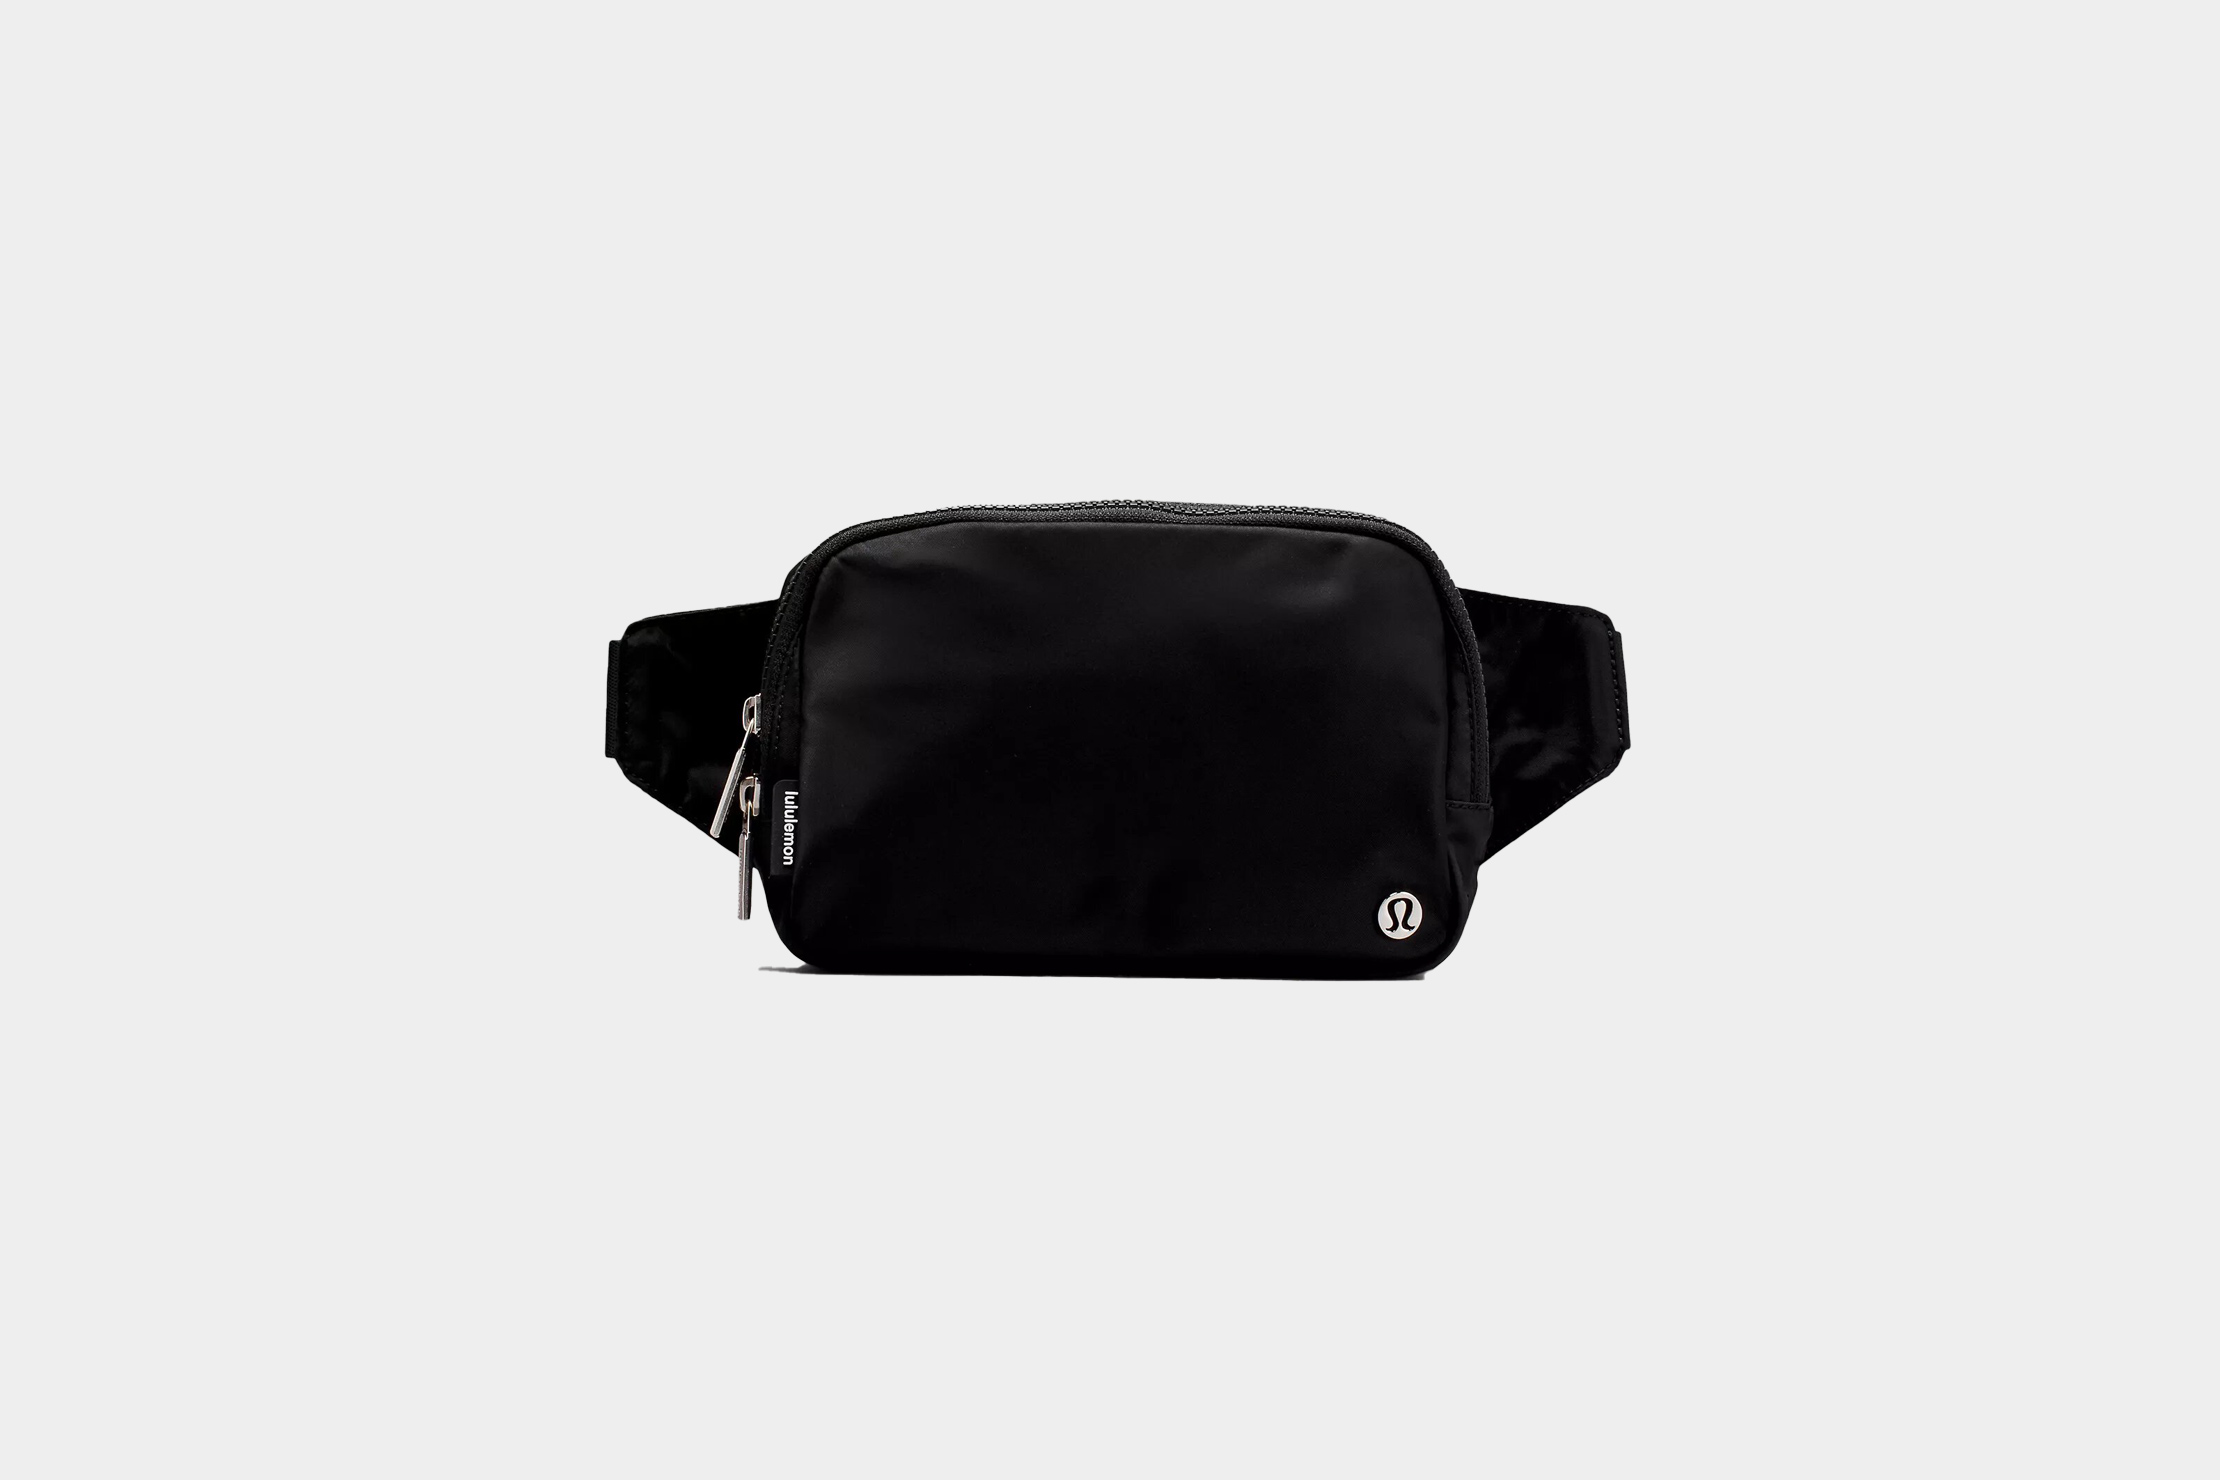 Lululemon Belt Bag Plus Size - Shop on Pinterest